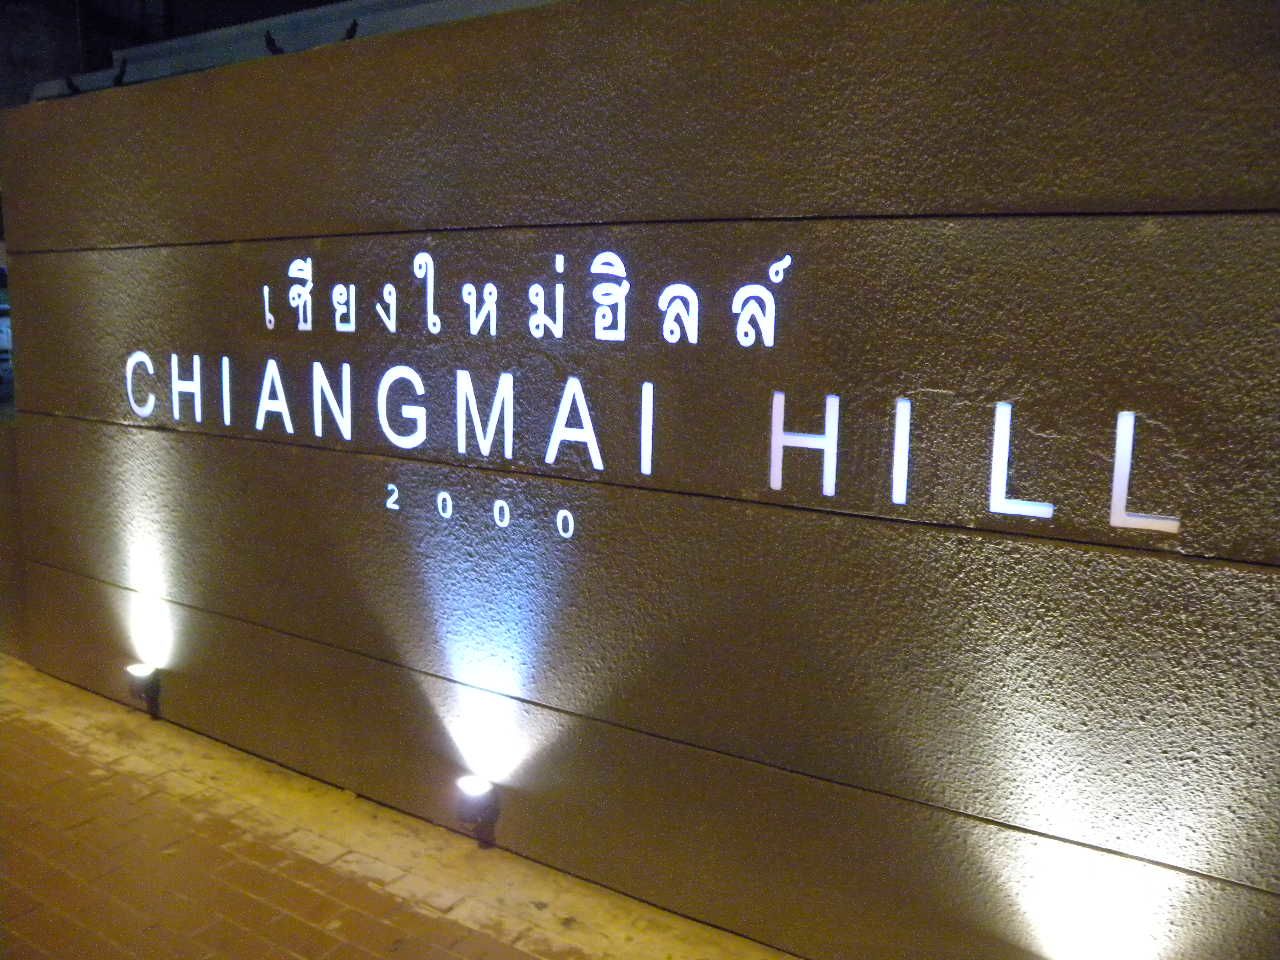 Chiangmai Hills 2000 Hotel